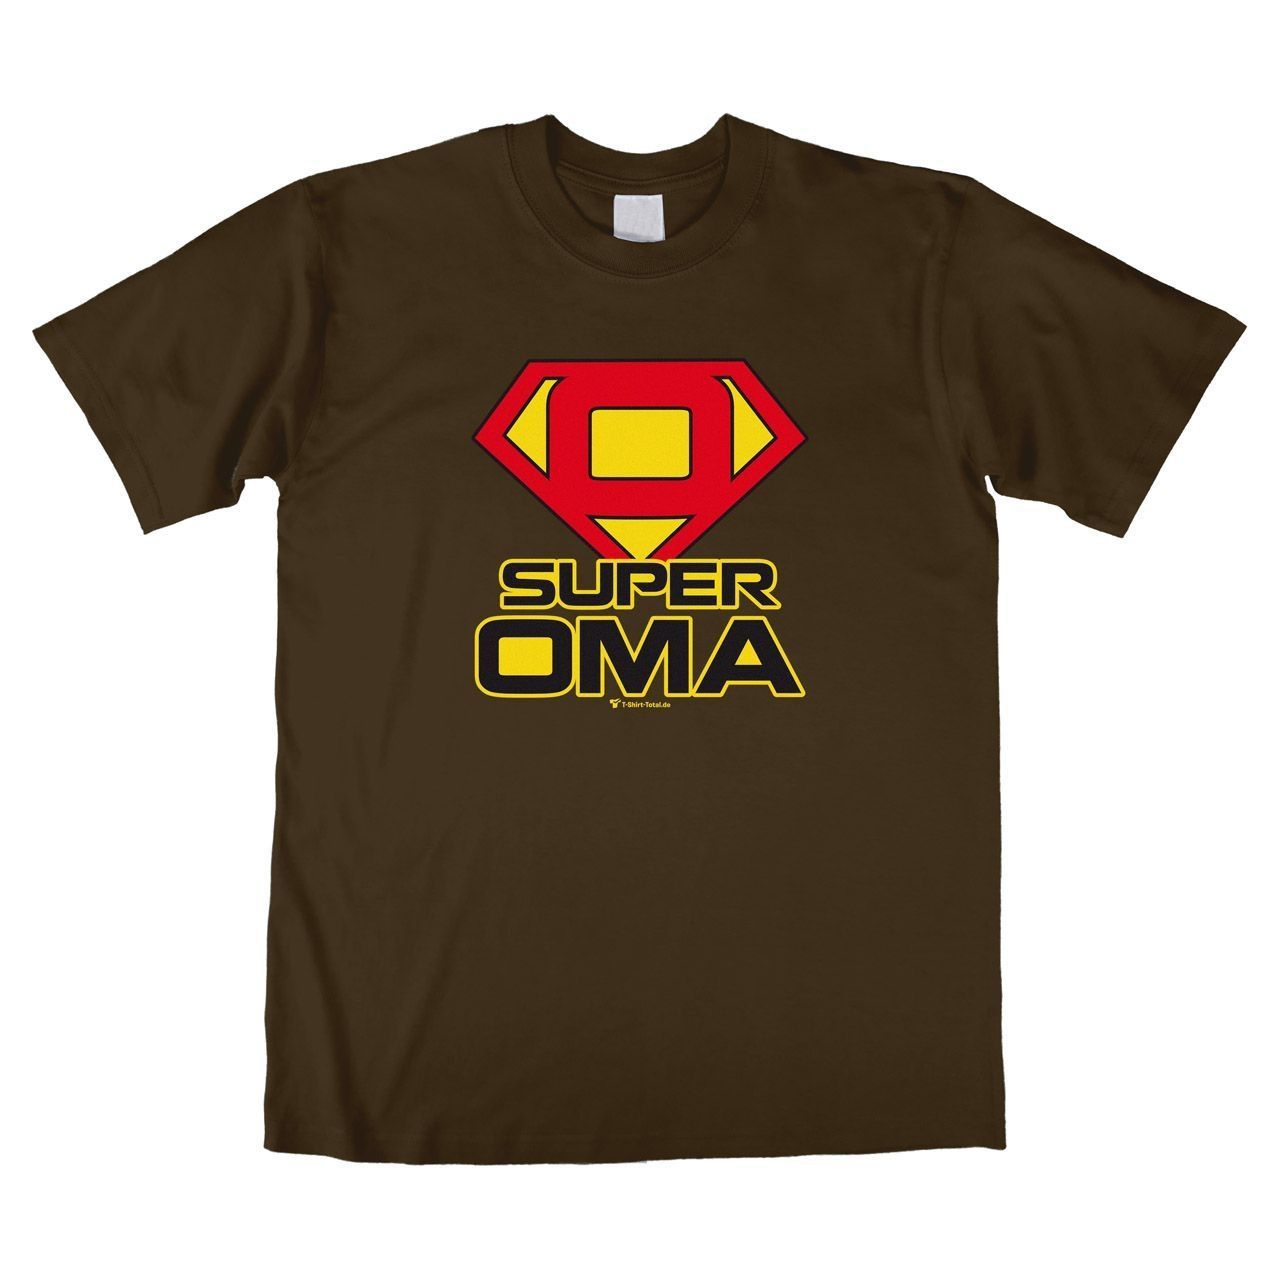 Super Oma Unisex T-Shirt braun Medium